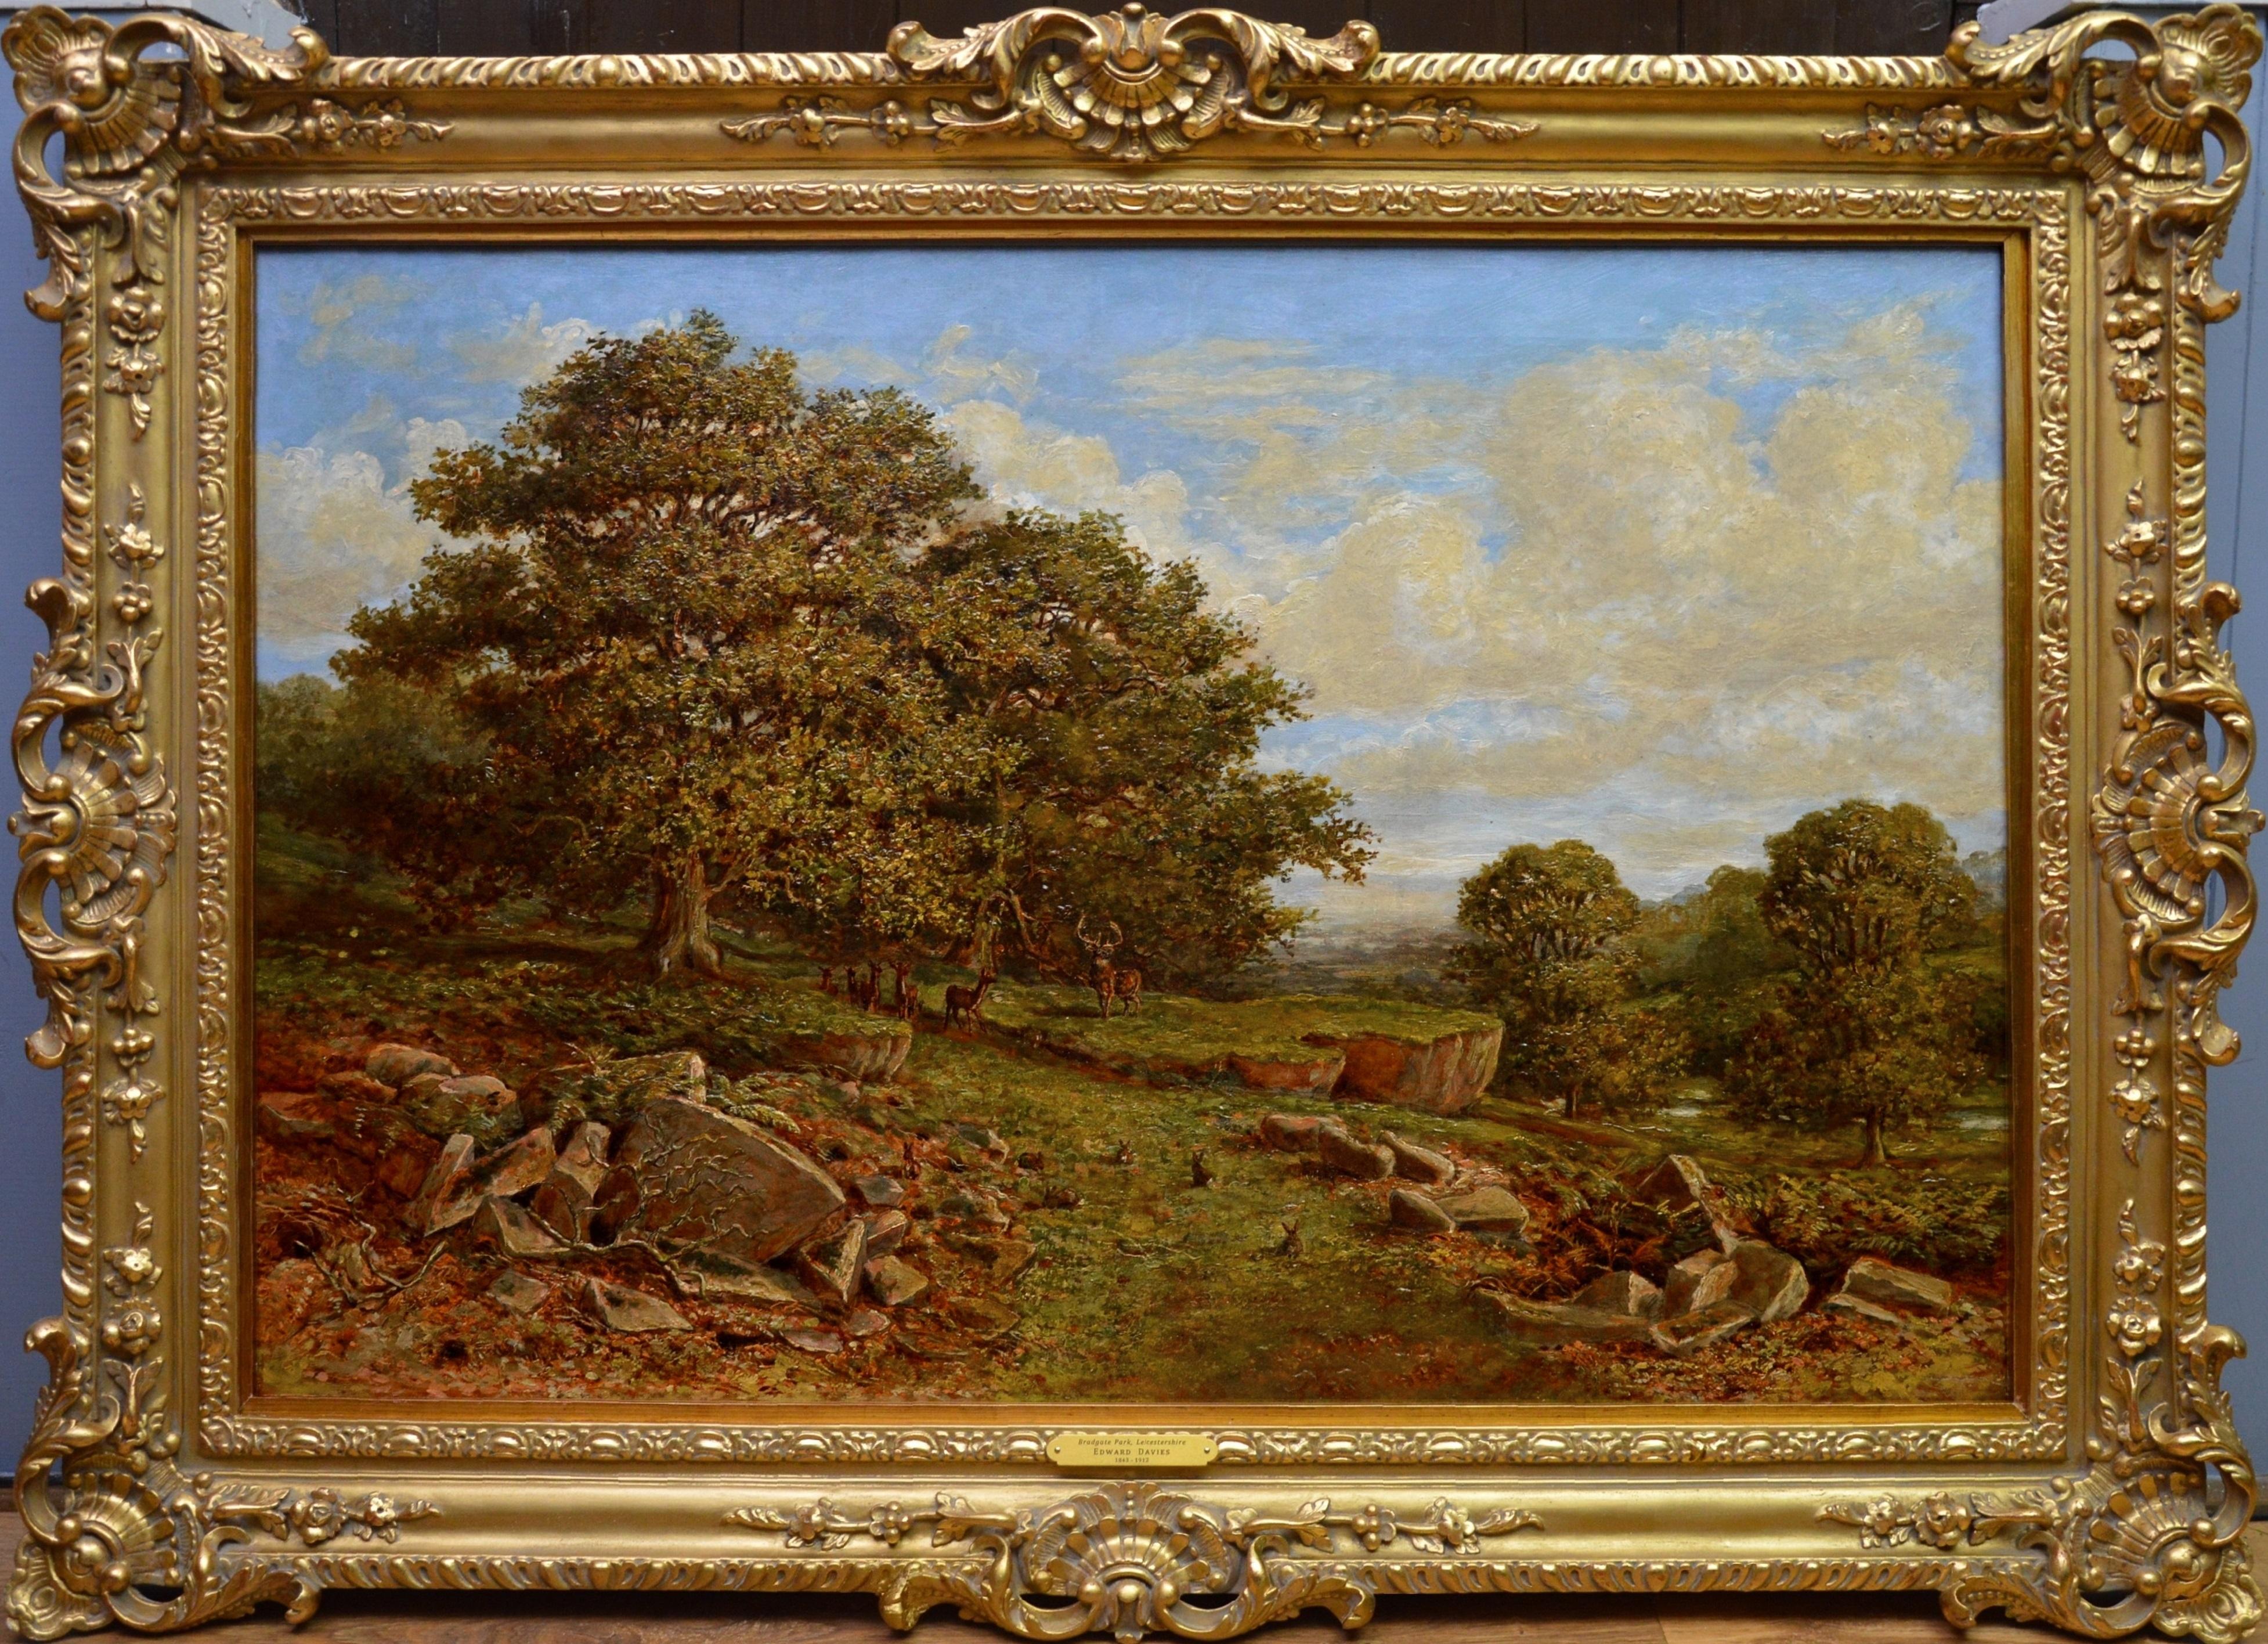 Edward Davies Animal Painting - Bradgate Park, Leicestershire - 19th Century Oil Painting - Royal Academy 1880